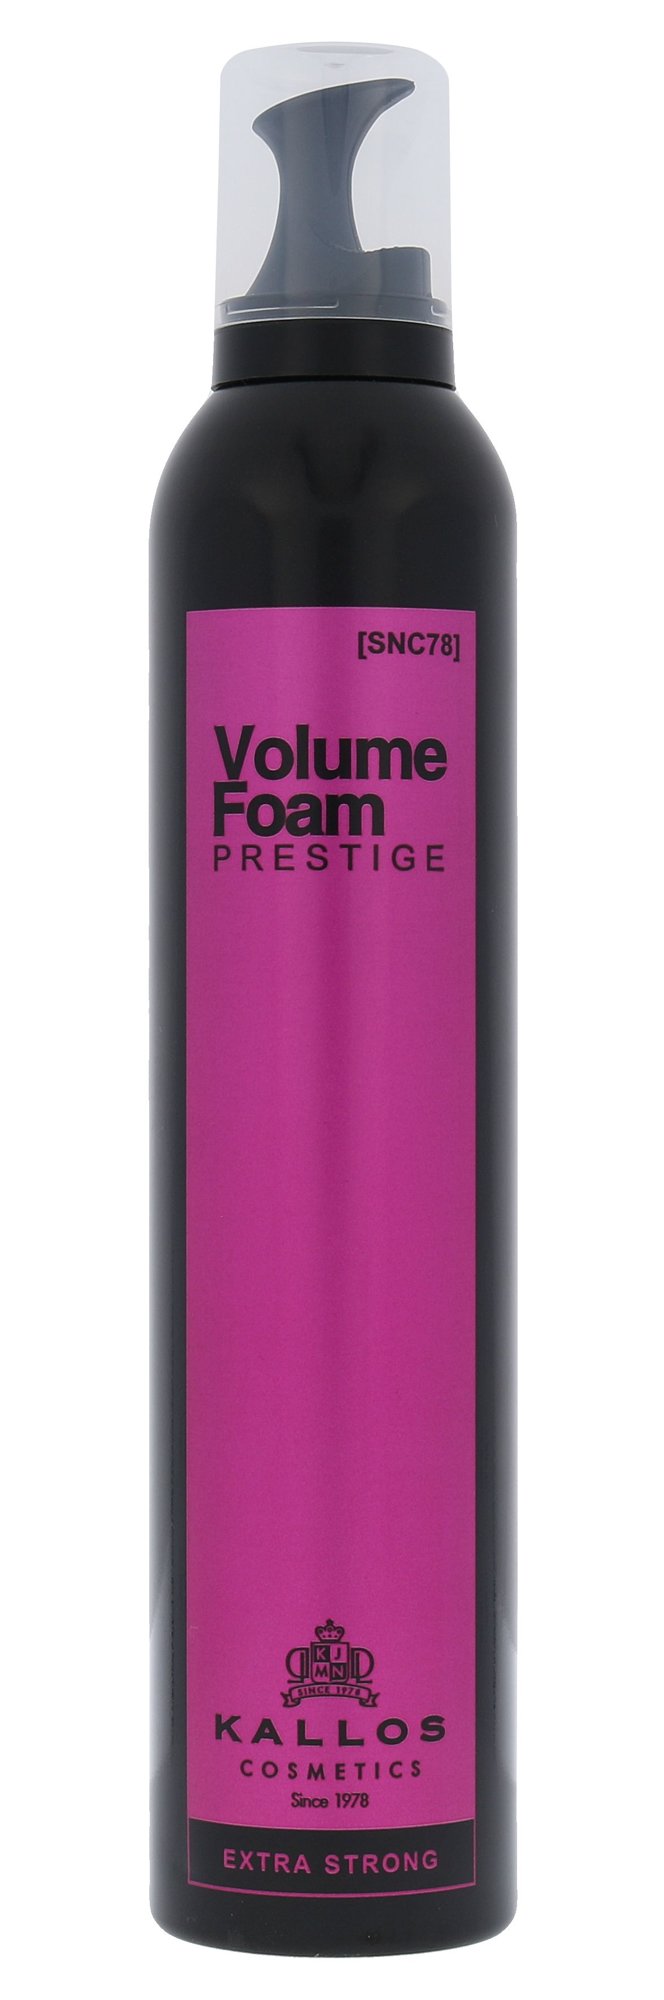 Kallos Volume Foam Prestige